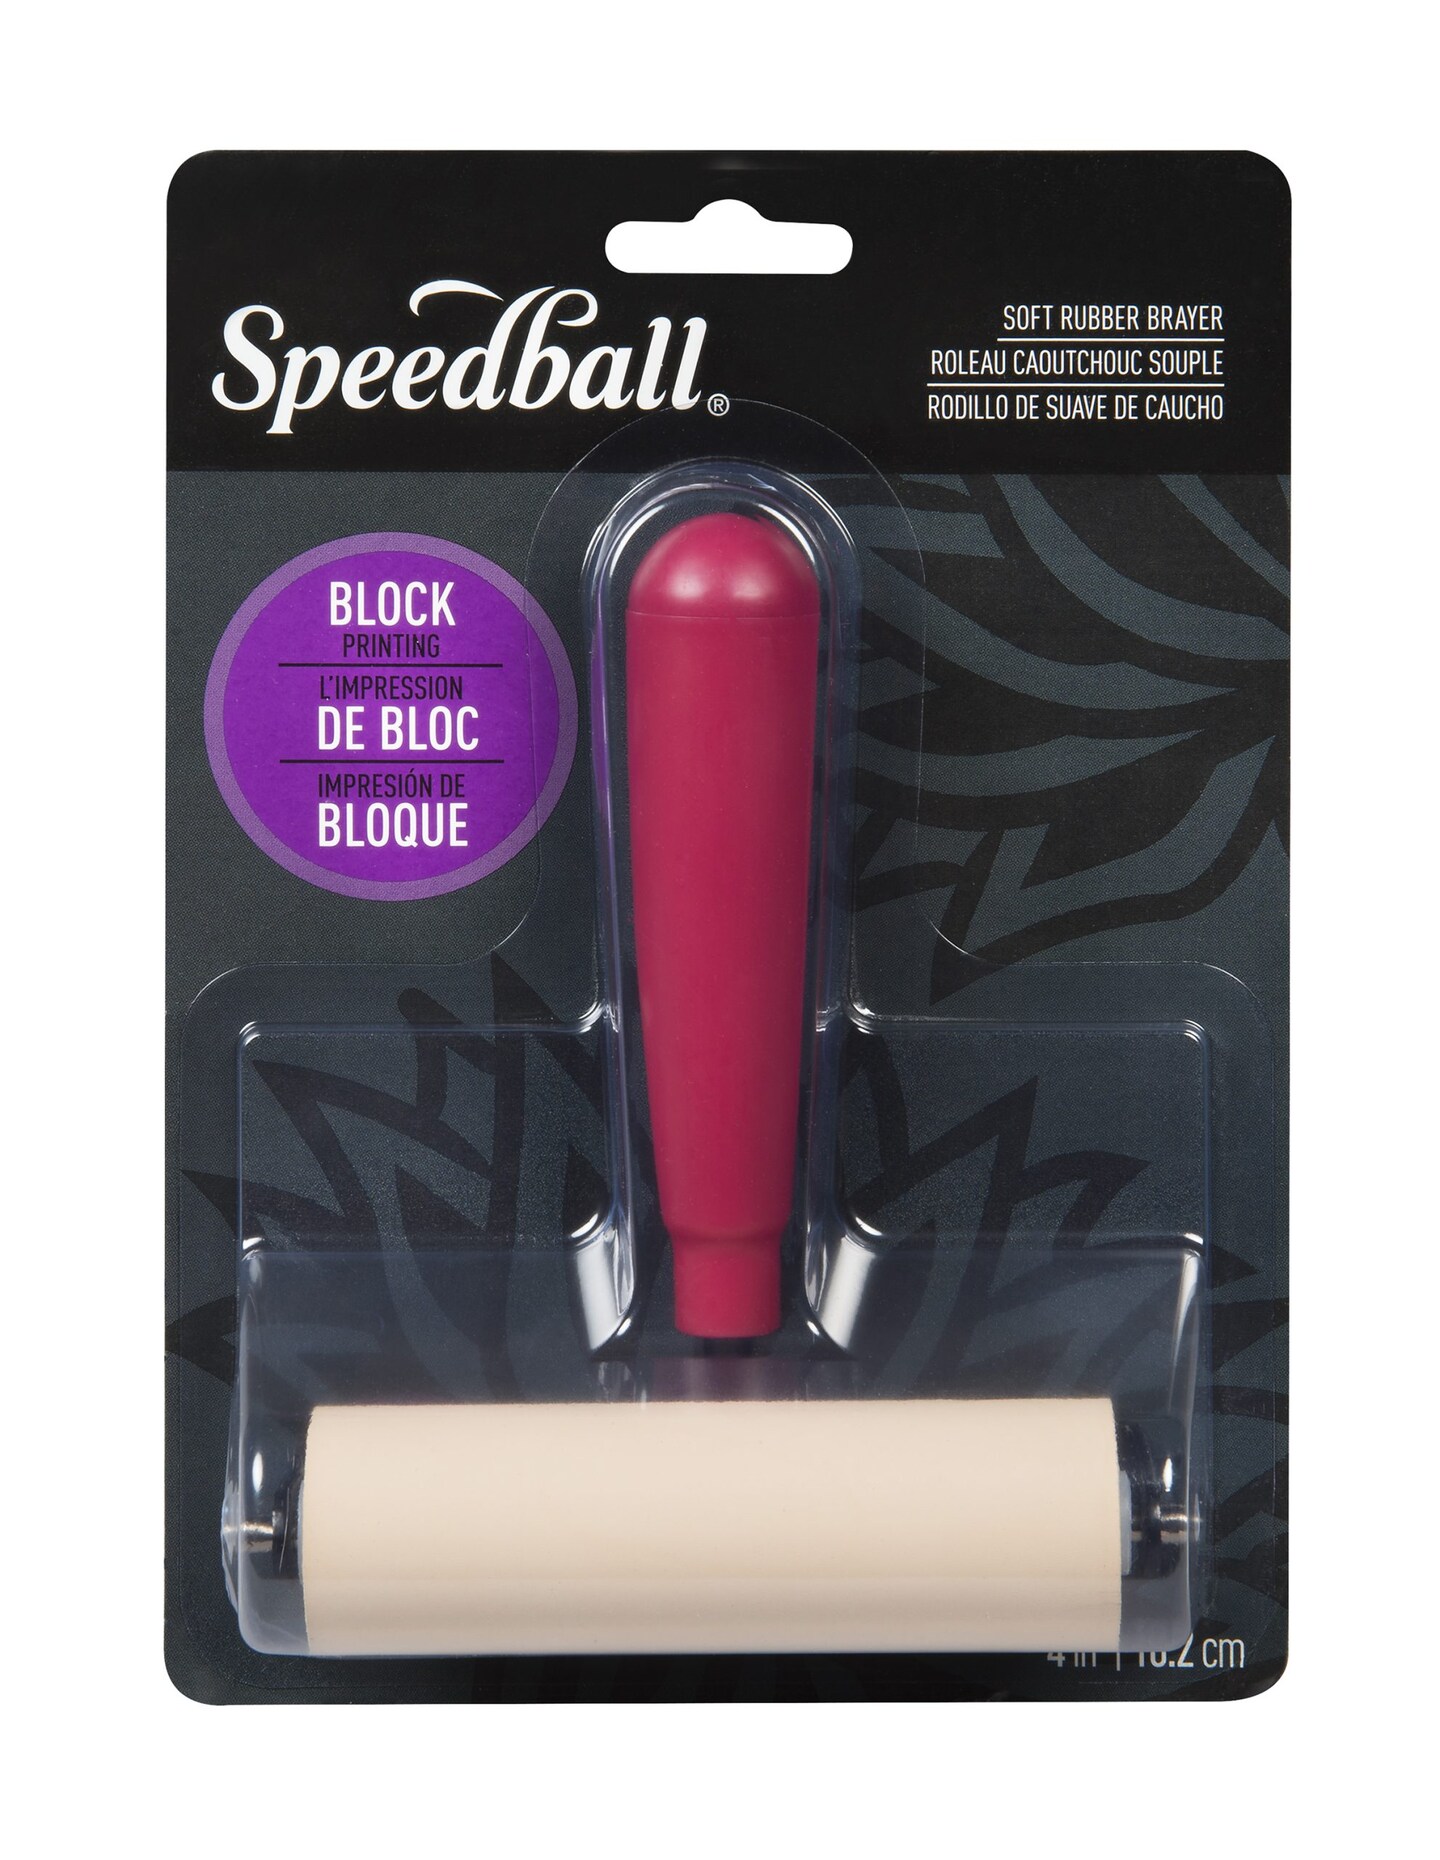 Vintage Speedball Brayer for Block Printing Roller No. 49 with Original Box